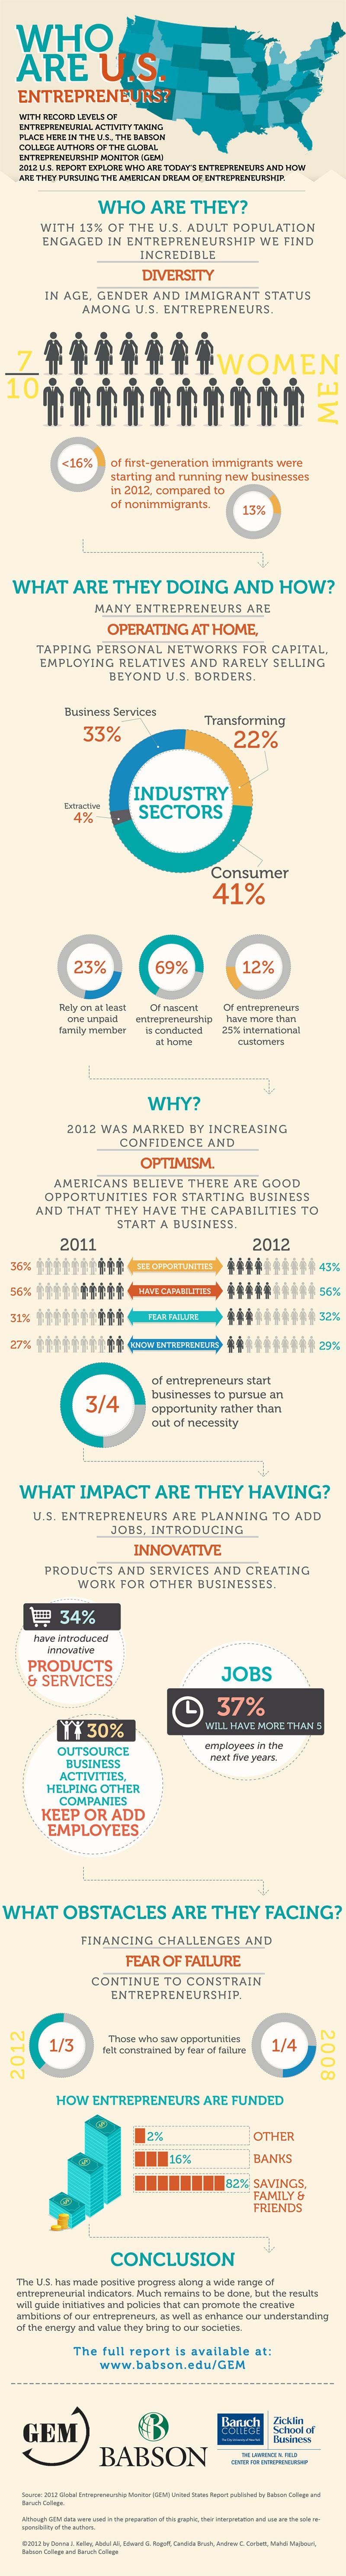 The Demographics of an Entrepreneur